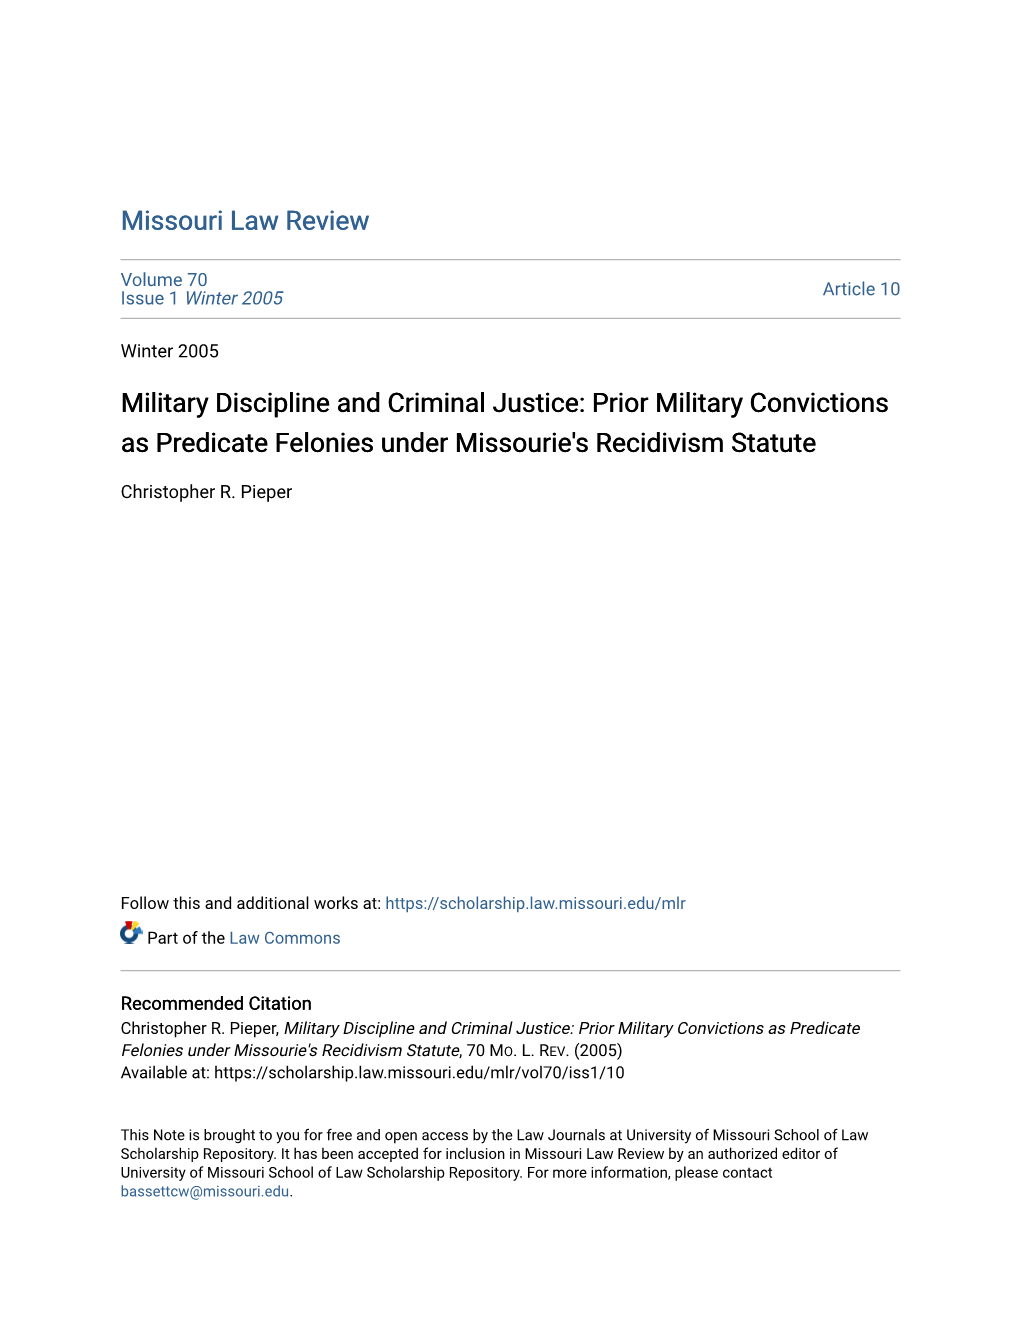 Prior Military Convictions As Predicate Felonies Under Missourie's Recidivism Statute